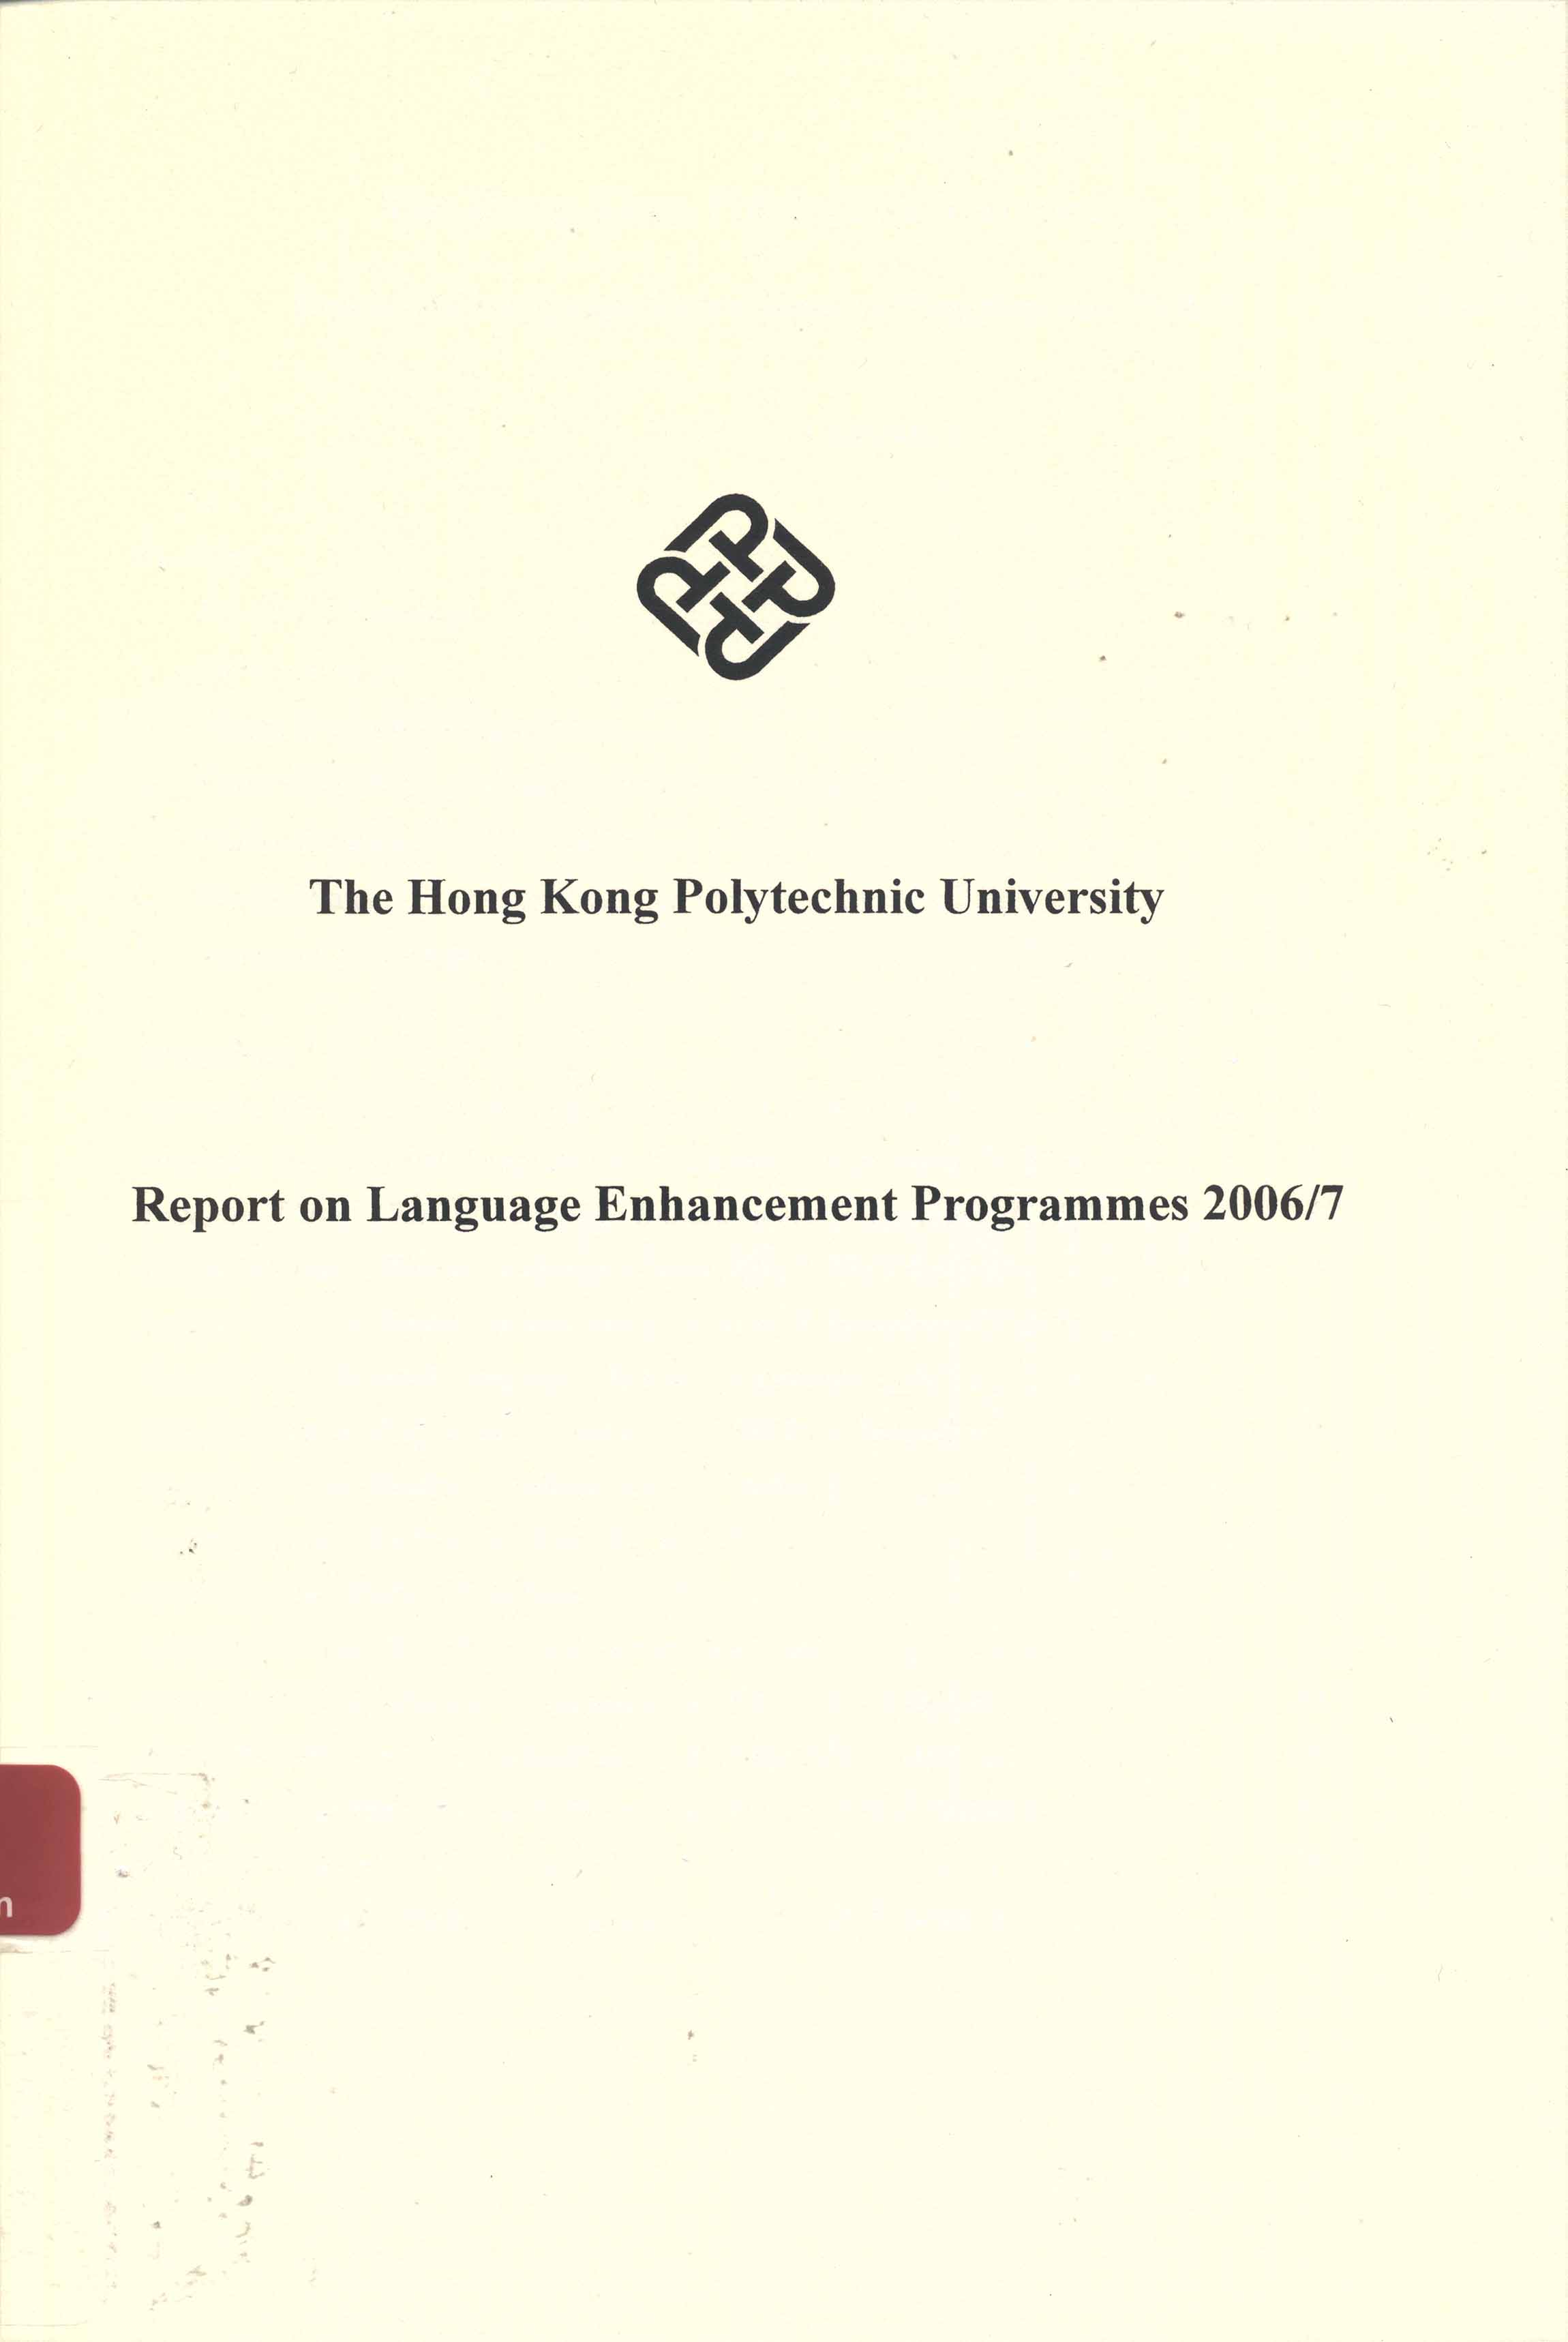 Annual report on language enhancement programmes [2006/2007]